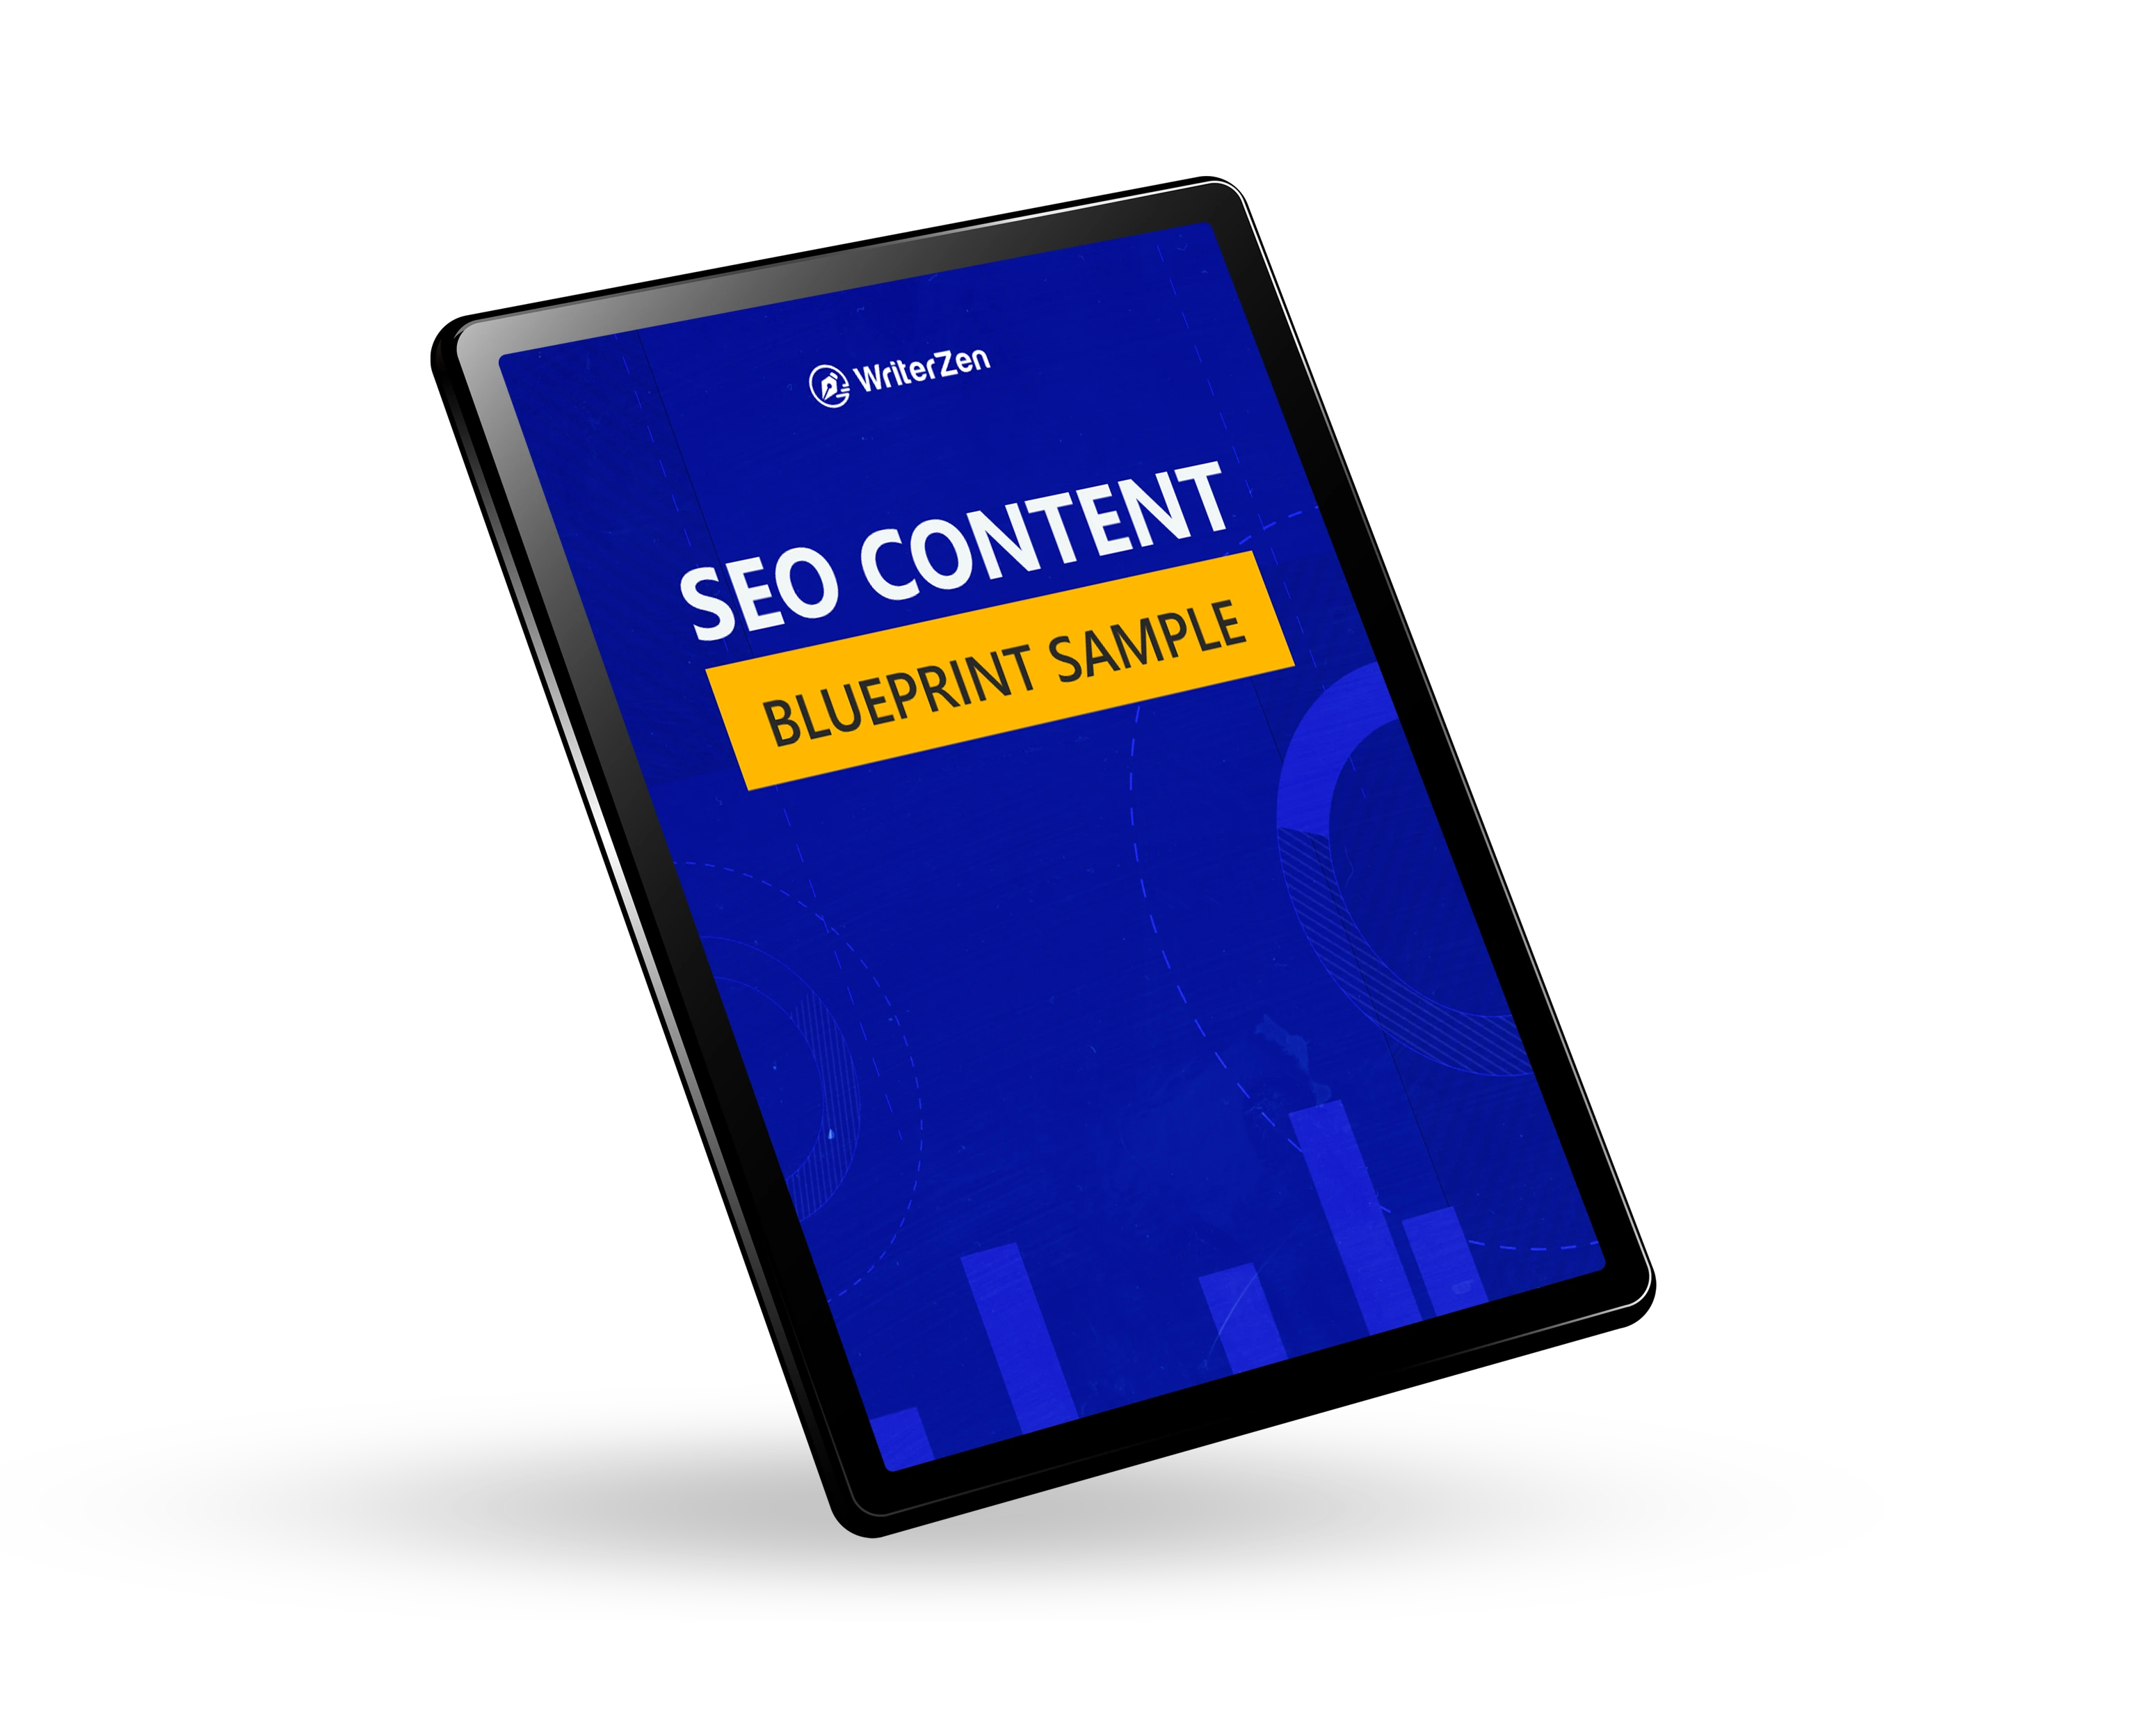 SEO Content Blueprint Sample